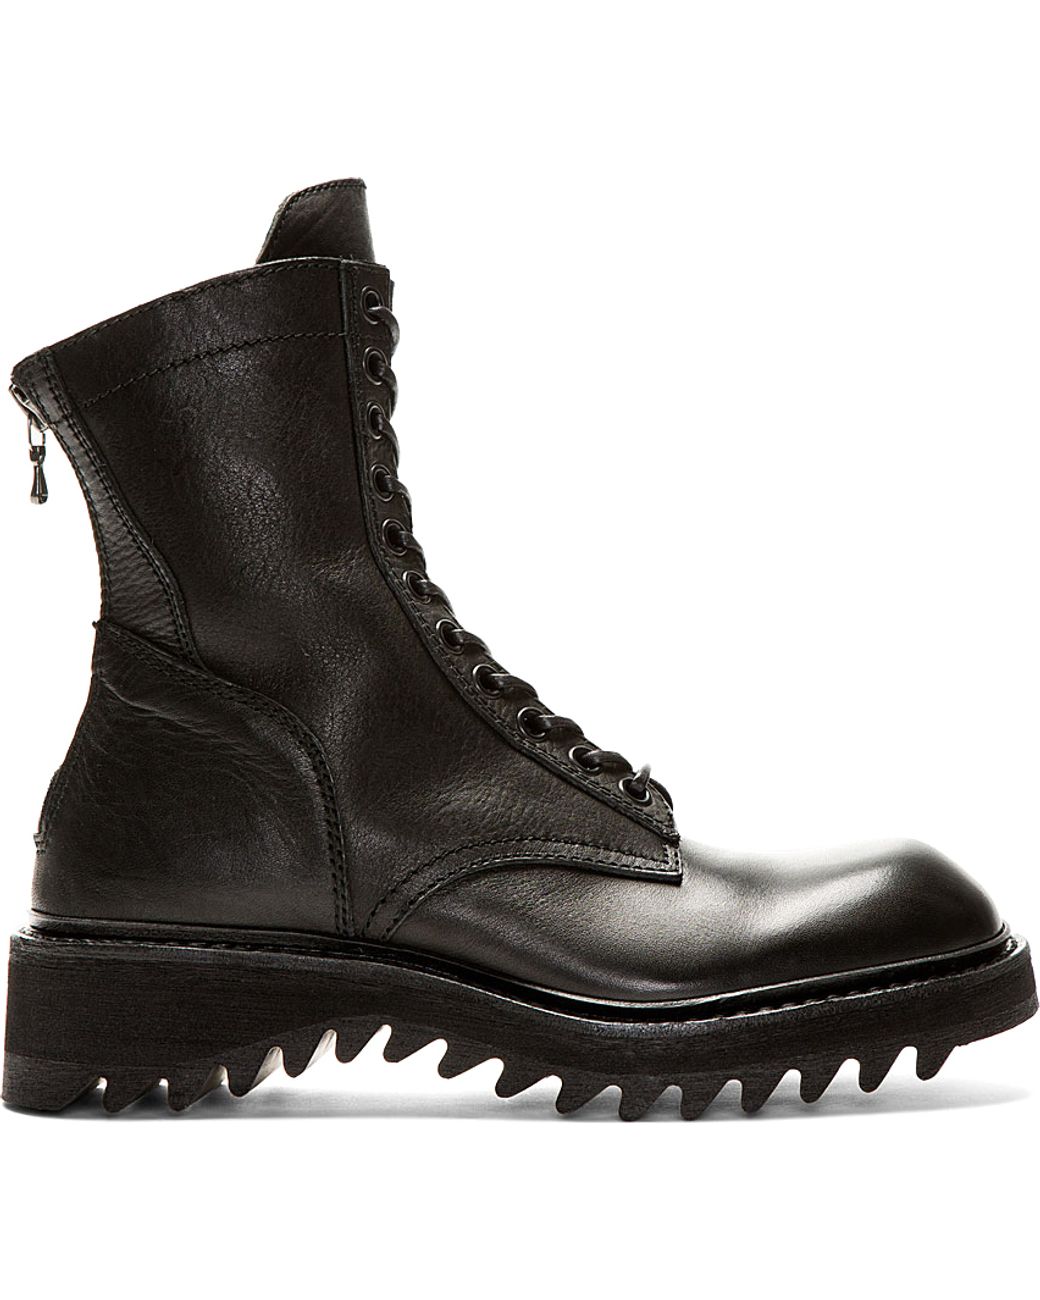 Julius Men's Black Leather Zipped Combat Boots